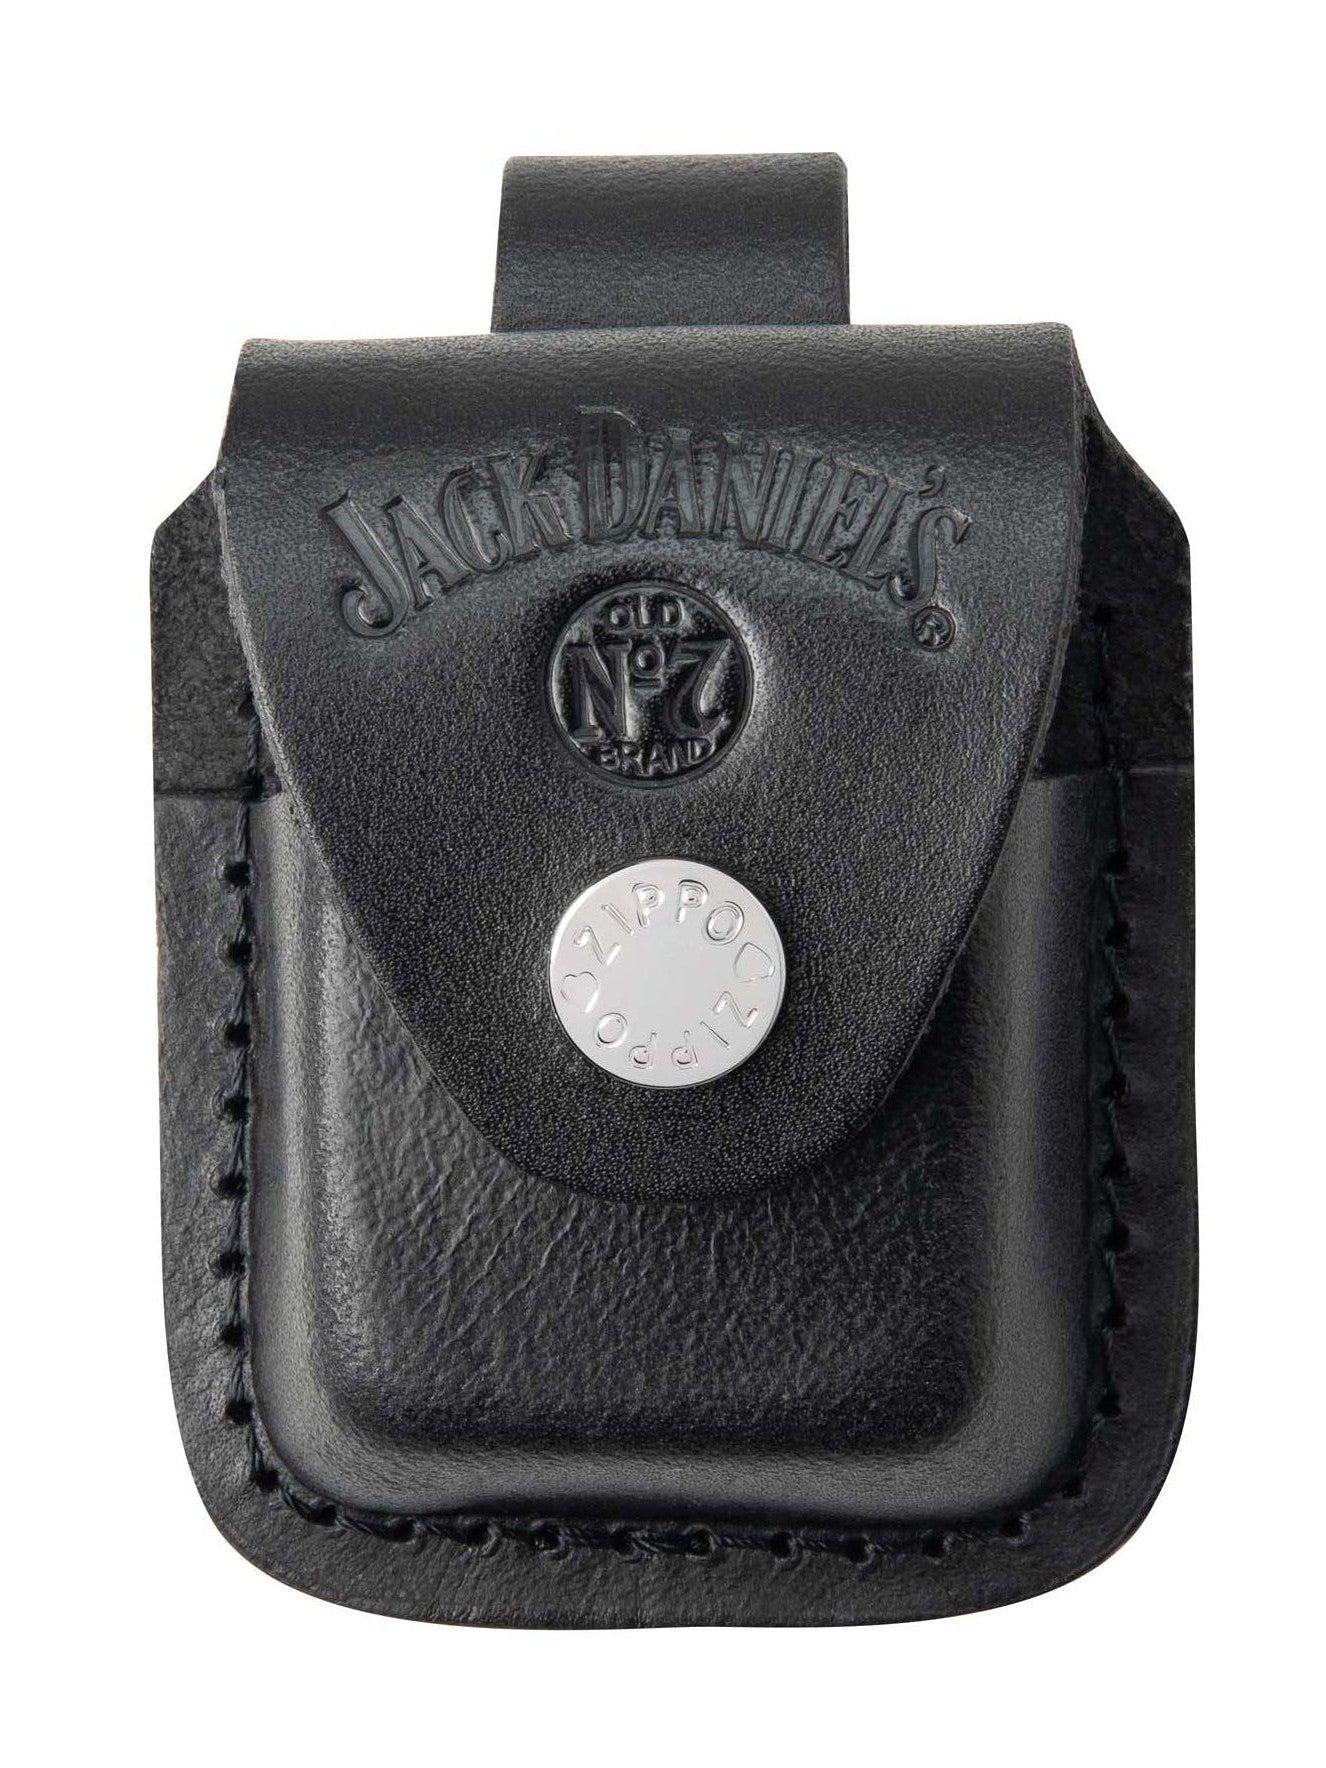 Zippo Jack Daniel's Lighter and Pouch Gift Set - Black Matte 48460